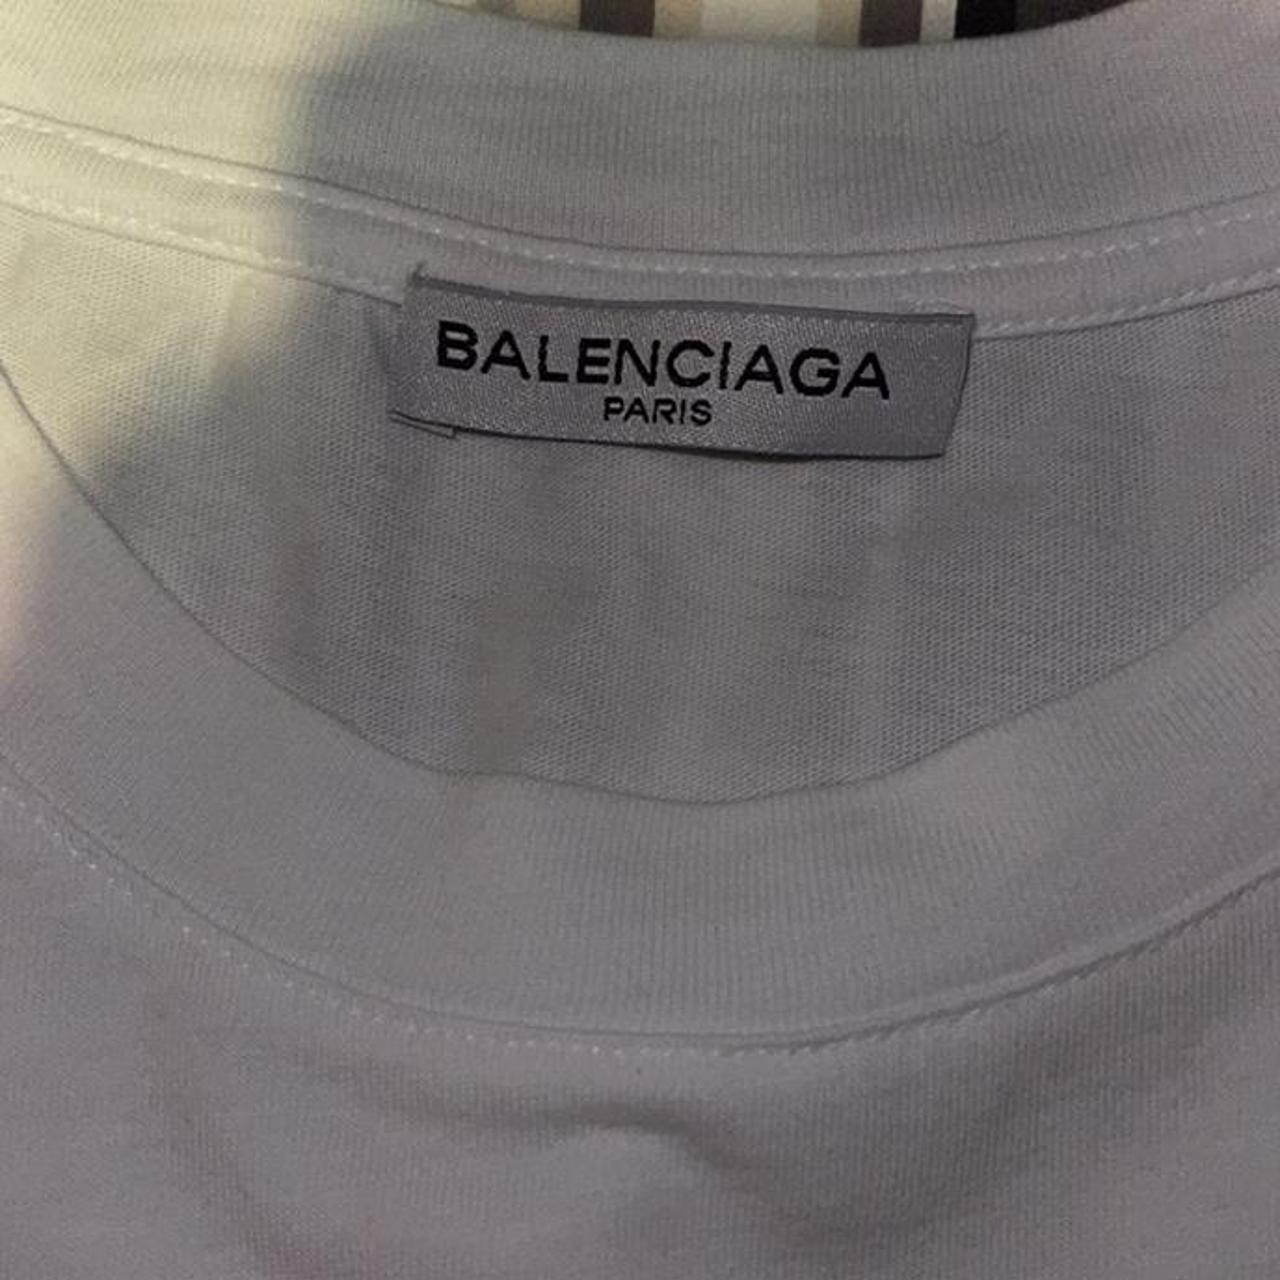 White balenciaga crew t shirt, 10/10 condition, was... - Depop